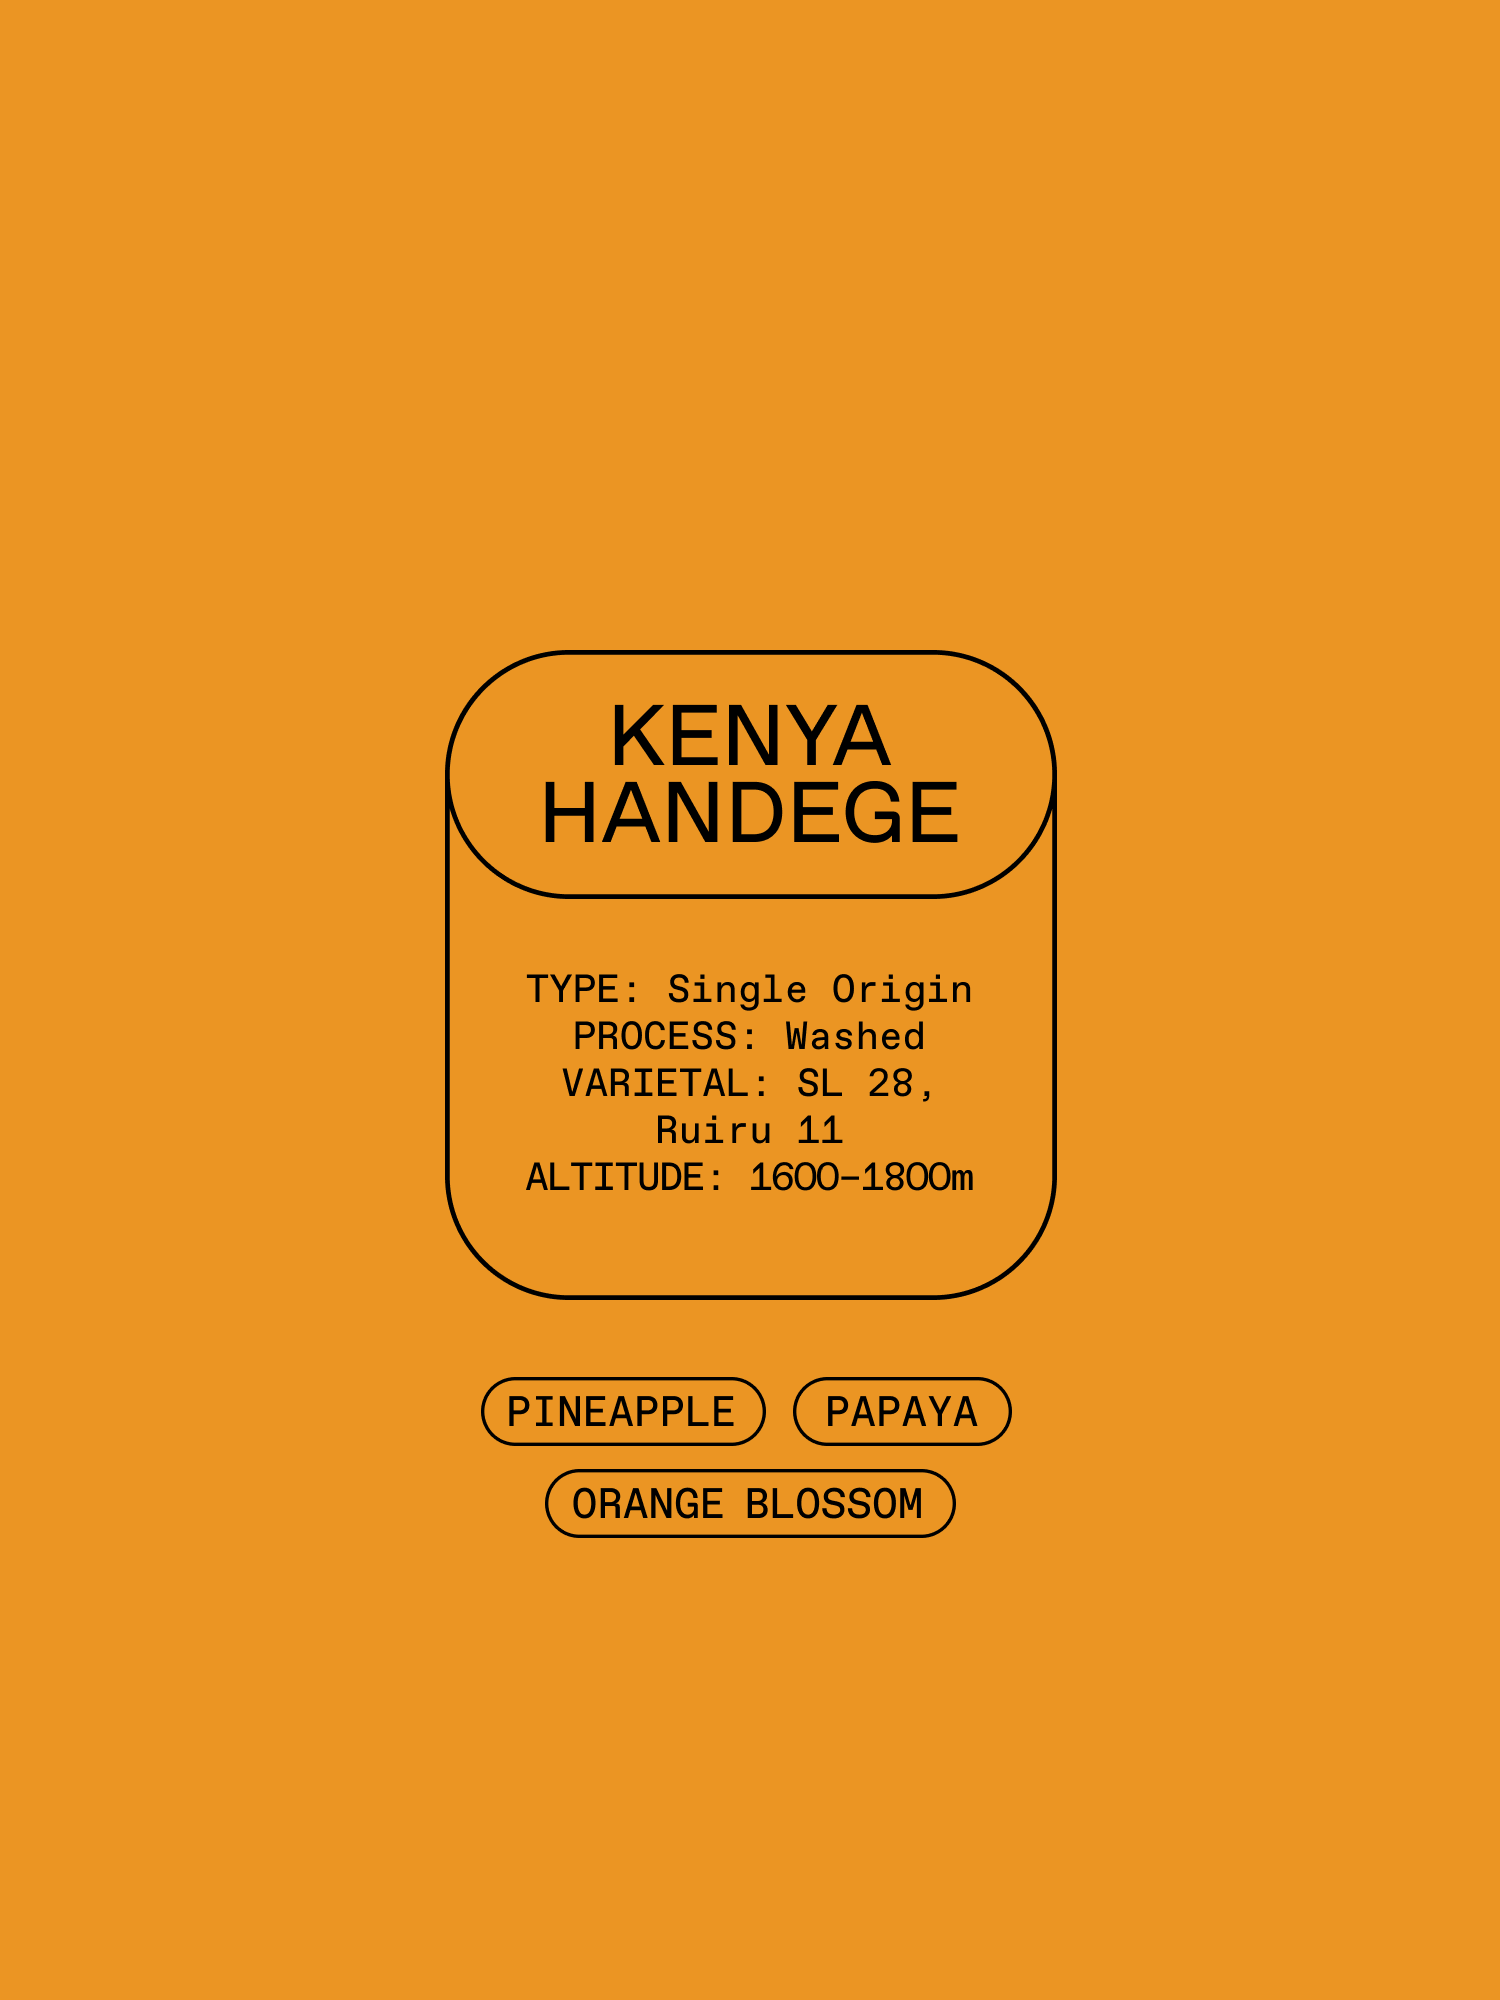 Kenya Handege